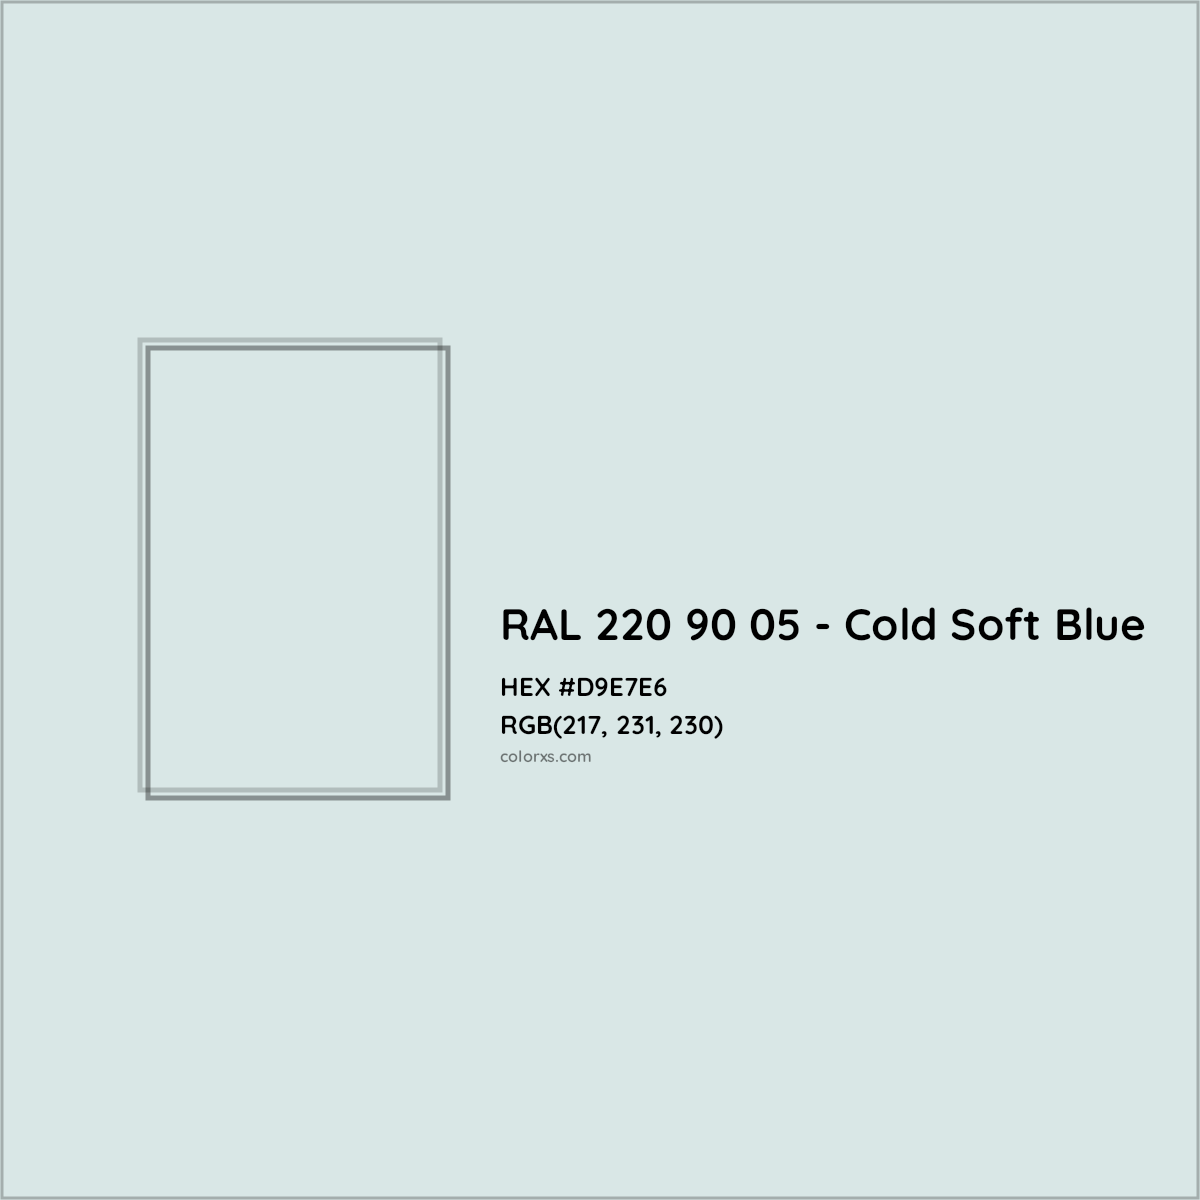 HEX #D9E7E6 RAL 220 90 05 - Cold Soft Blue CMS RAL Design - Color Code